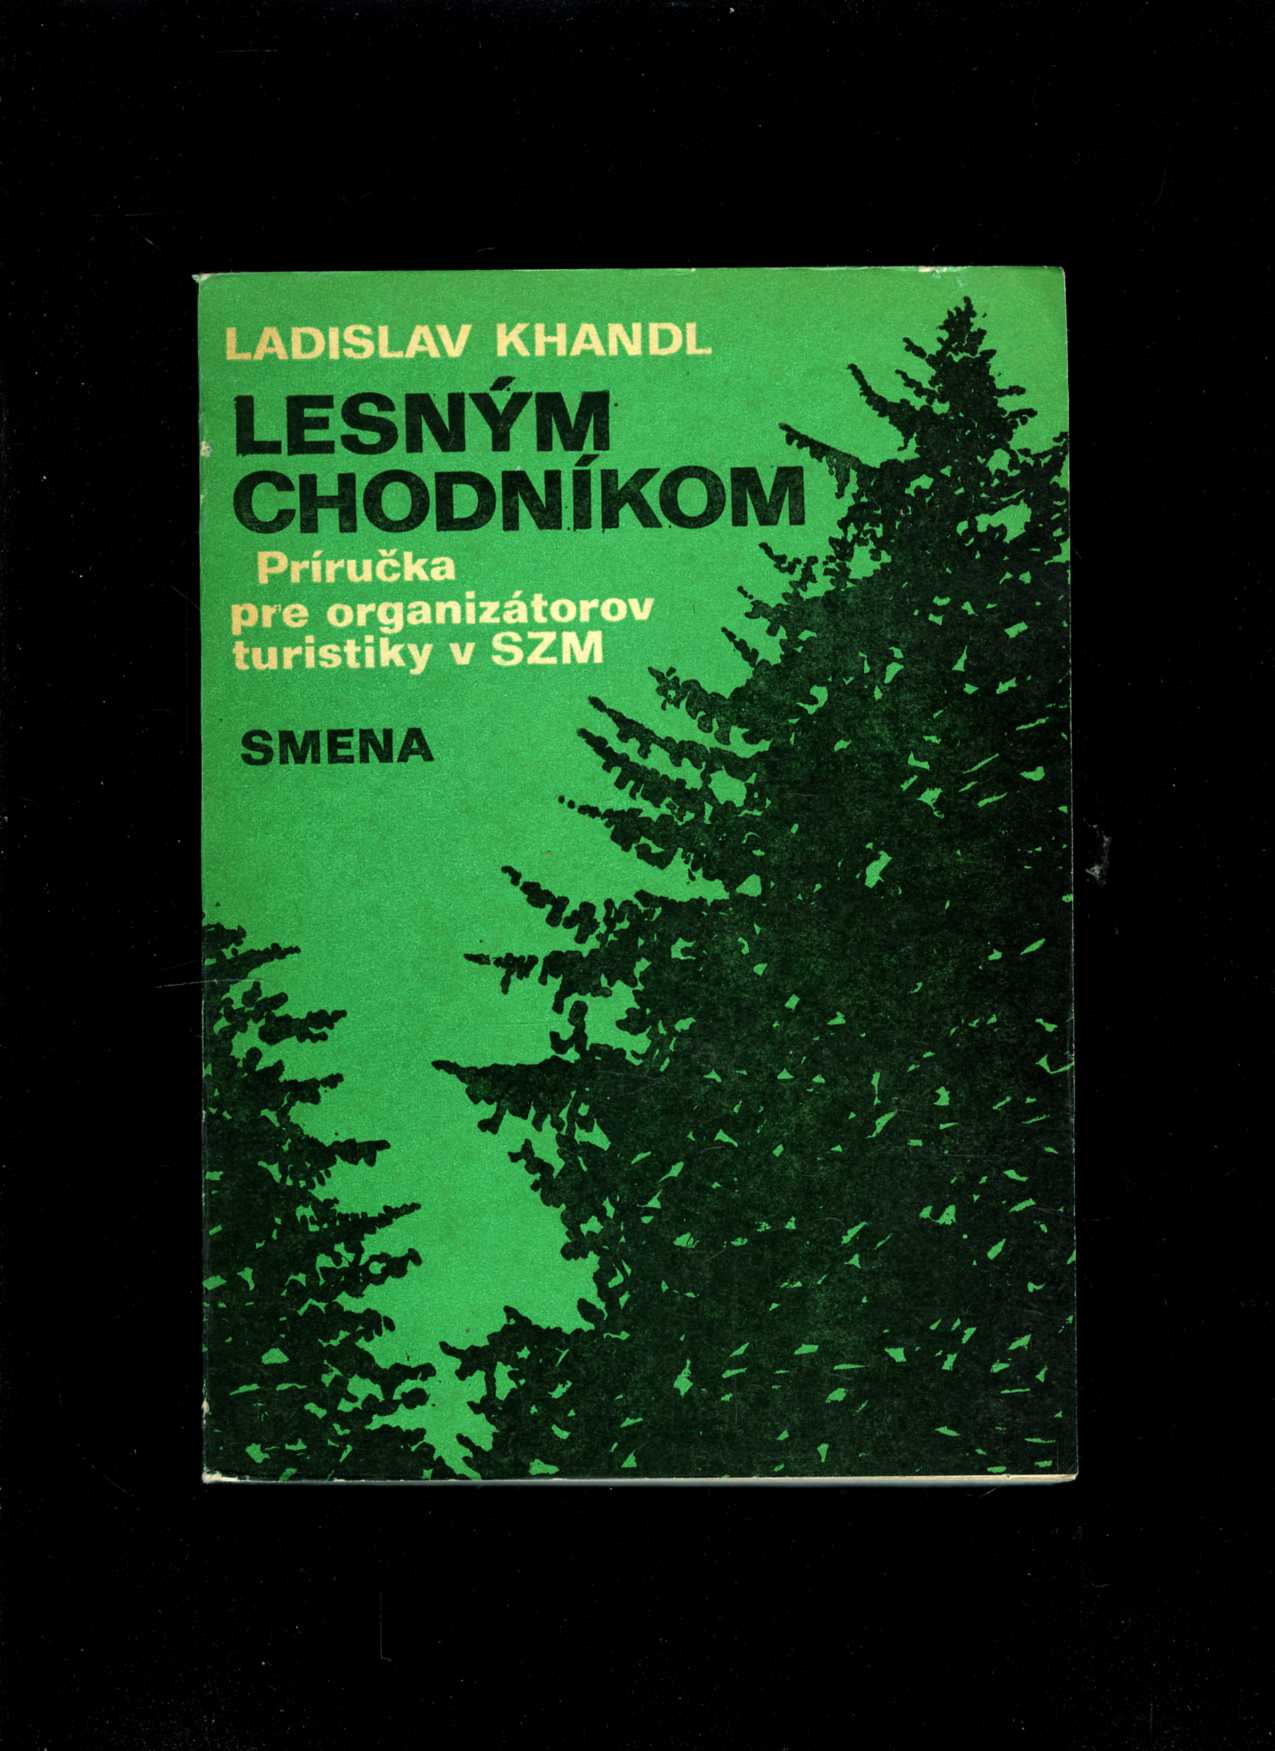 Lesným chodníkom (Ladislav Khandl)